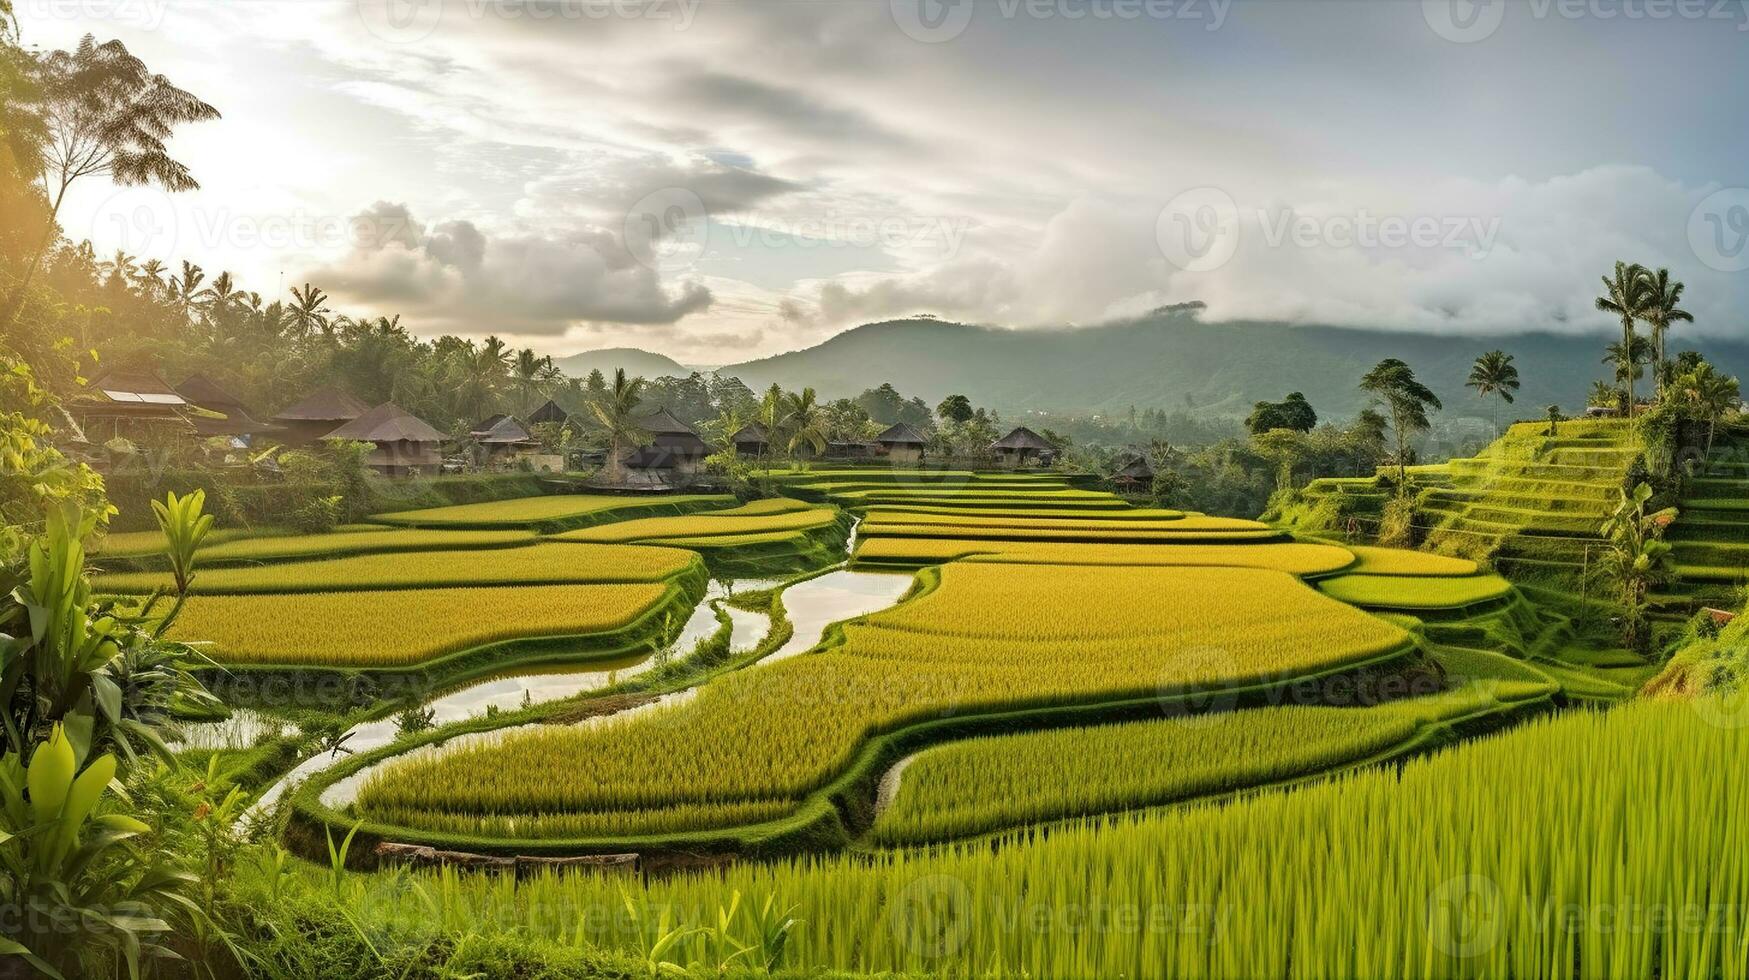 Bali, Indonesië, Azië, rijst- terrassen, rijst- velden, rijst- velden foto